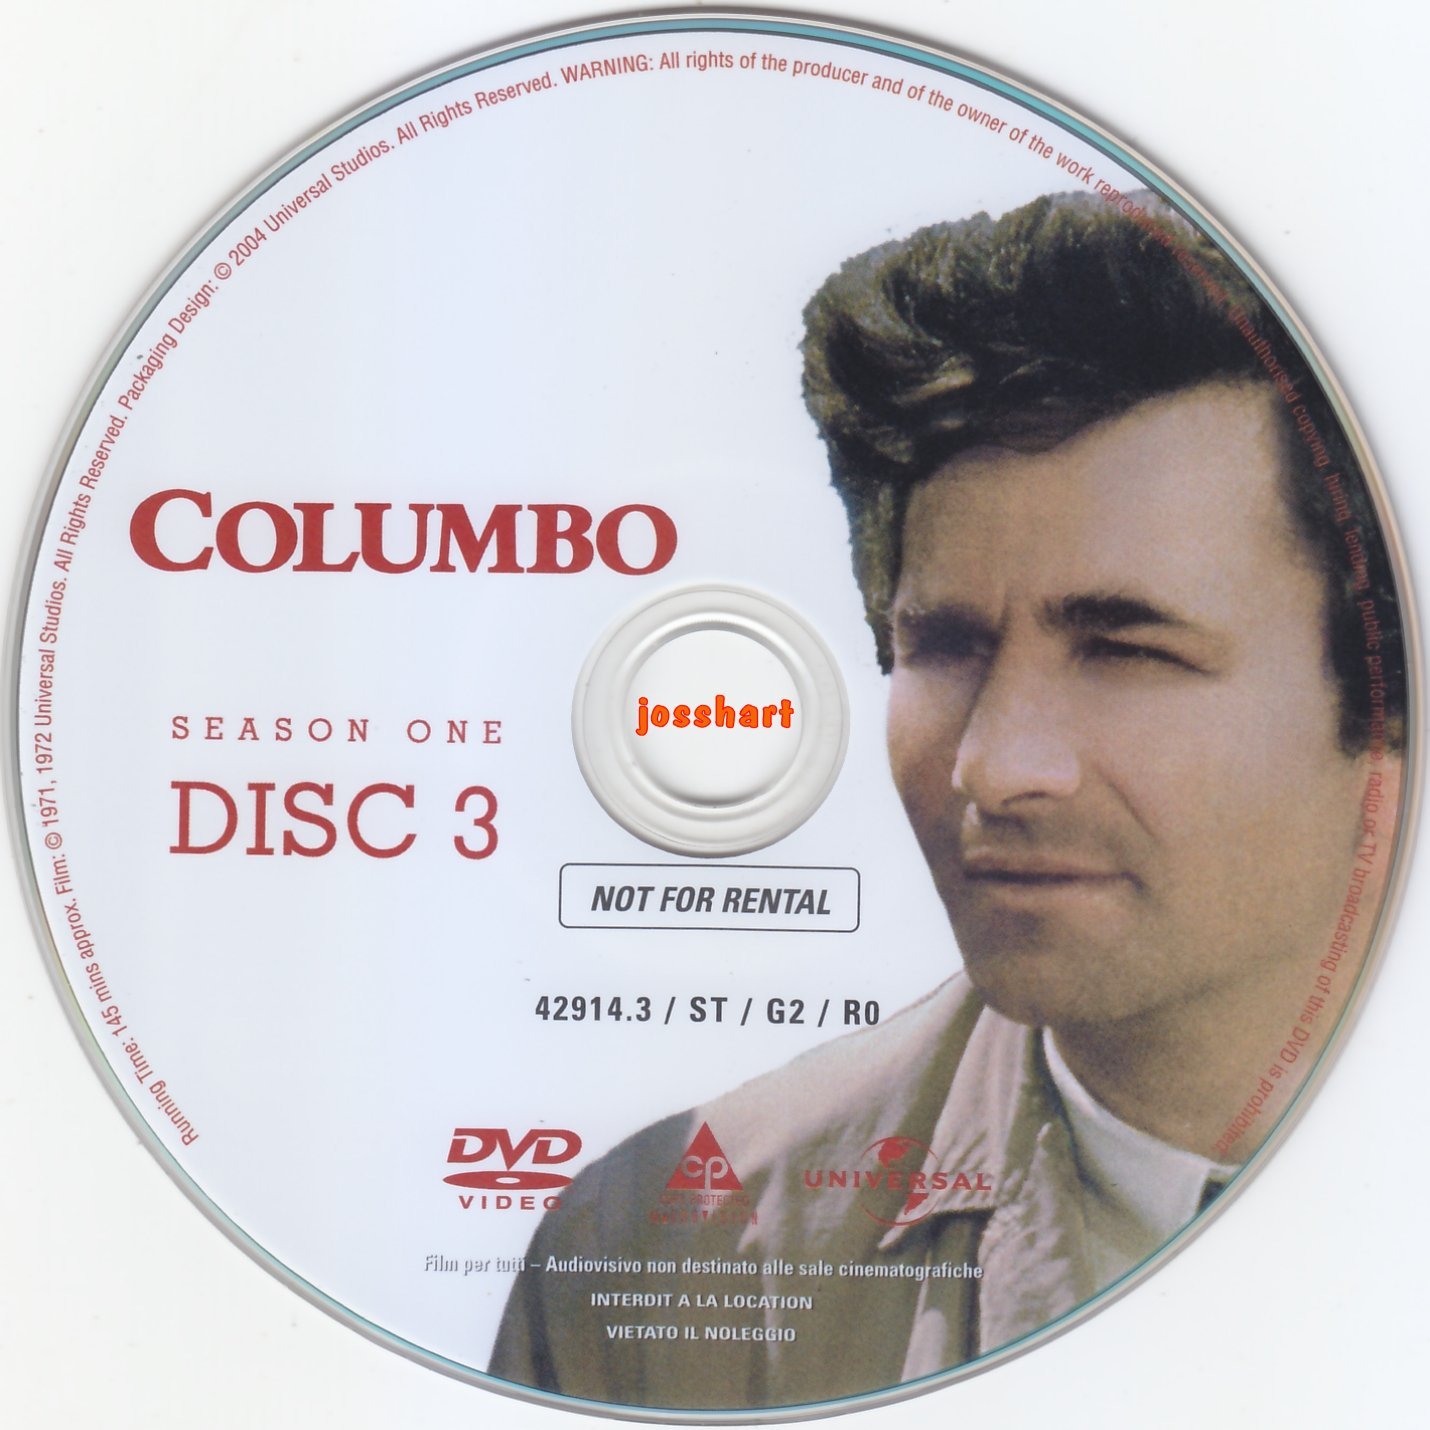 Columbo S1 DISC3